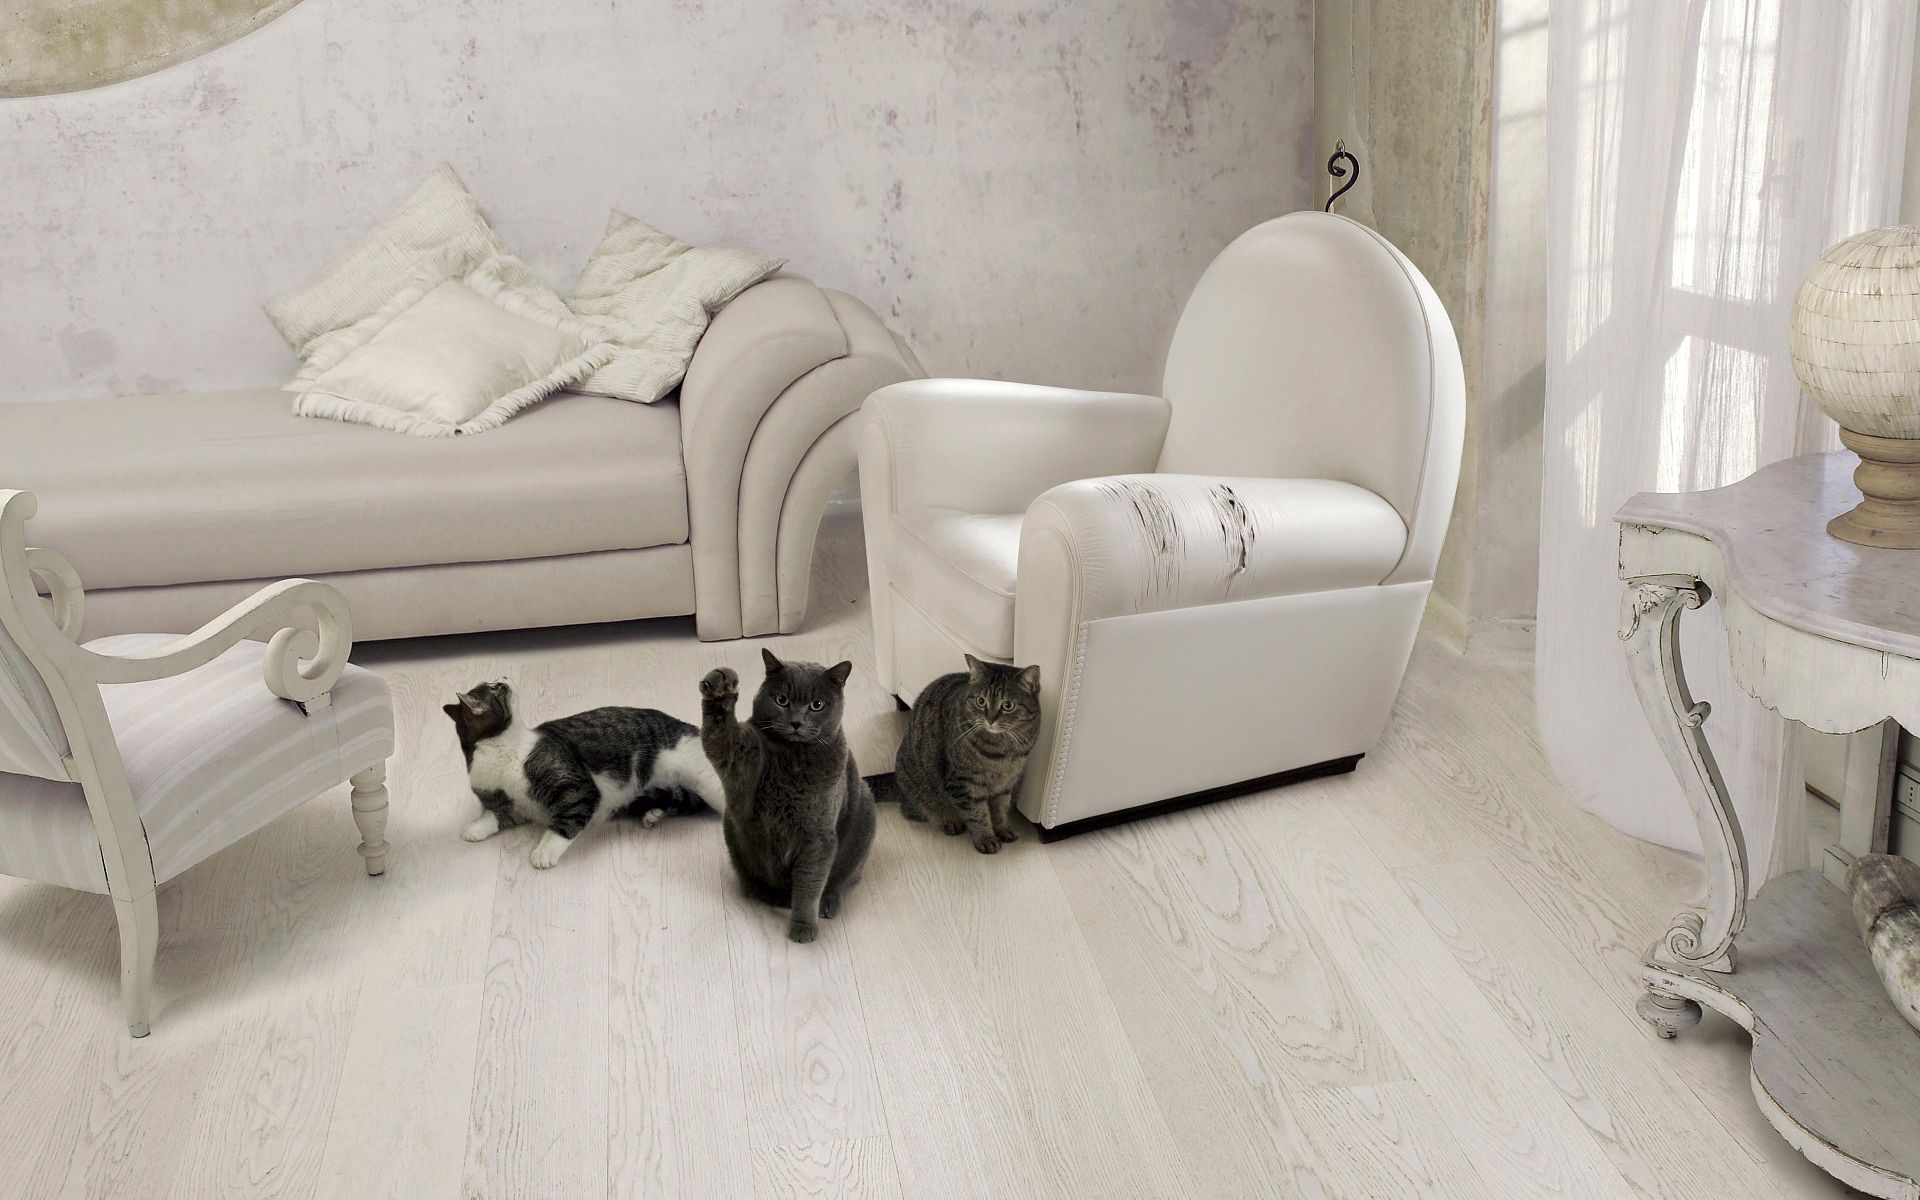 Full HD cats, animals, interior, chair, room, sofa, armchair, furniture, three